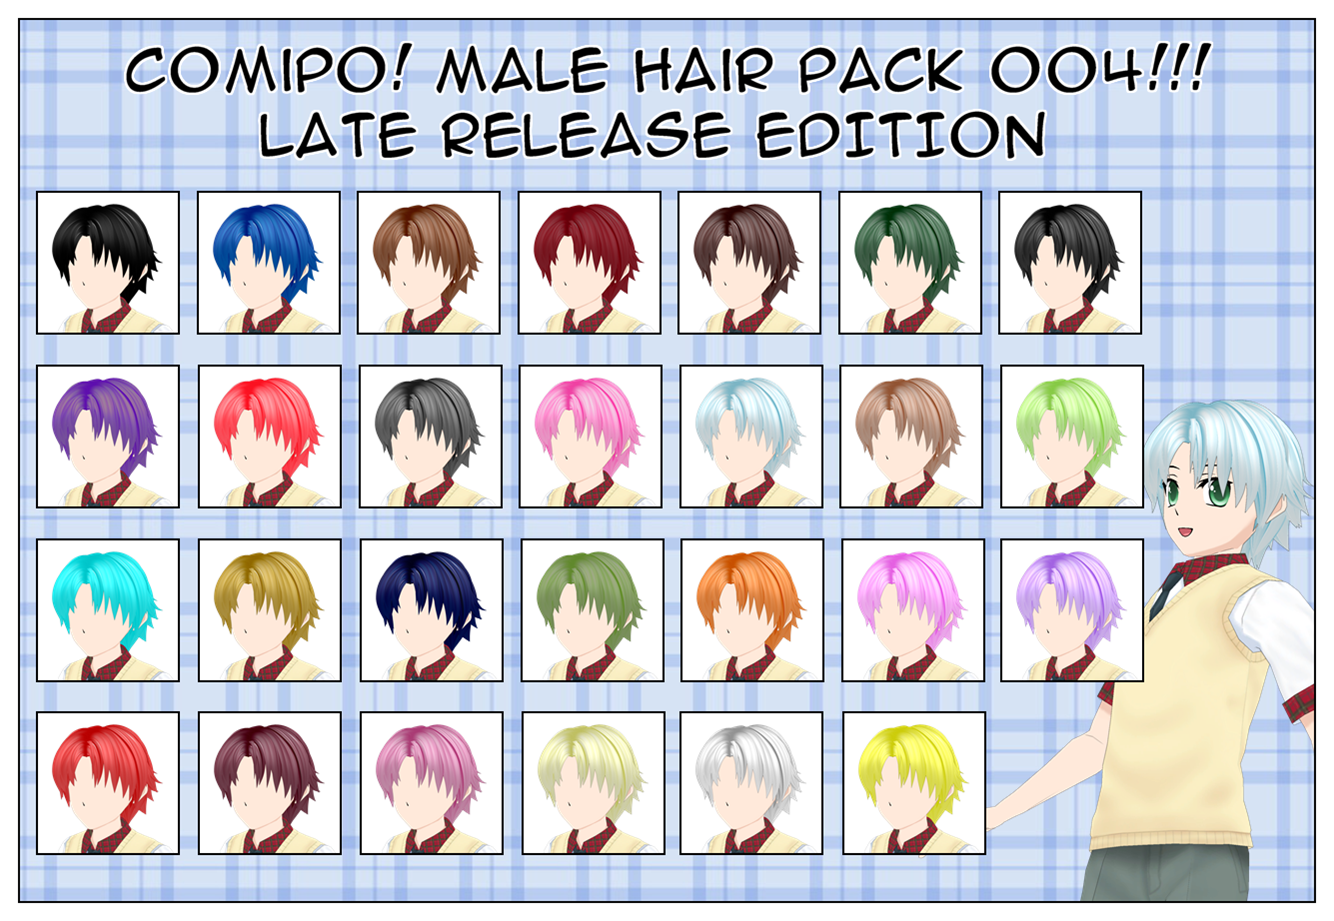 ArtStation - Anime Boy Hairstyles Pack